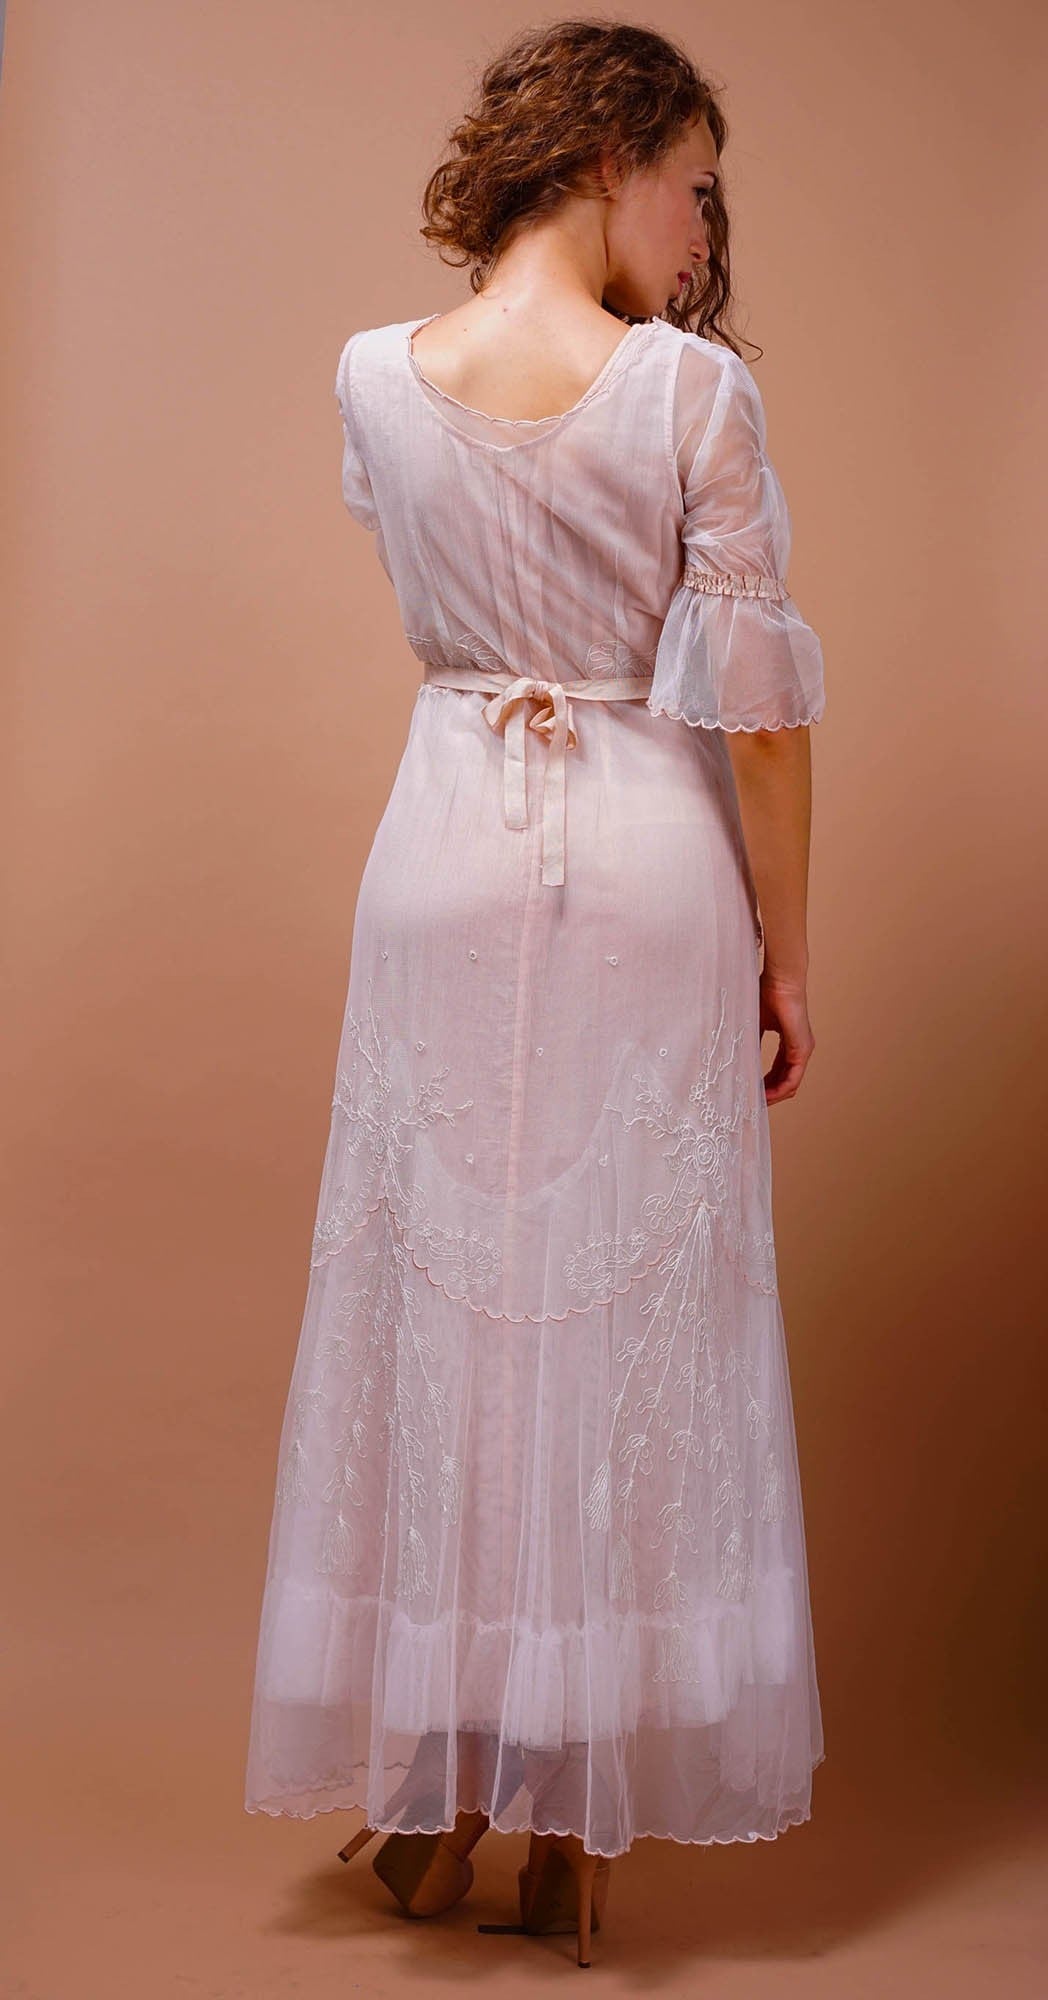 Edwardian Vintage Inspired Wedding Dress in Ivory-Blush by Nataya - SOLD OUT